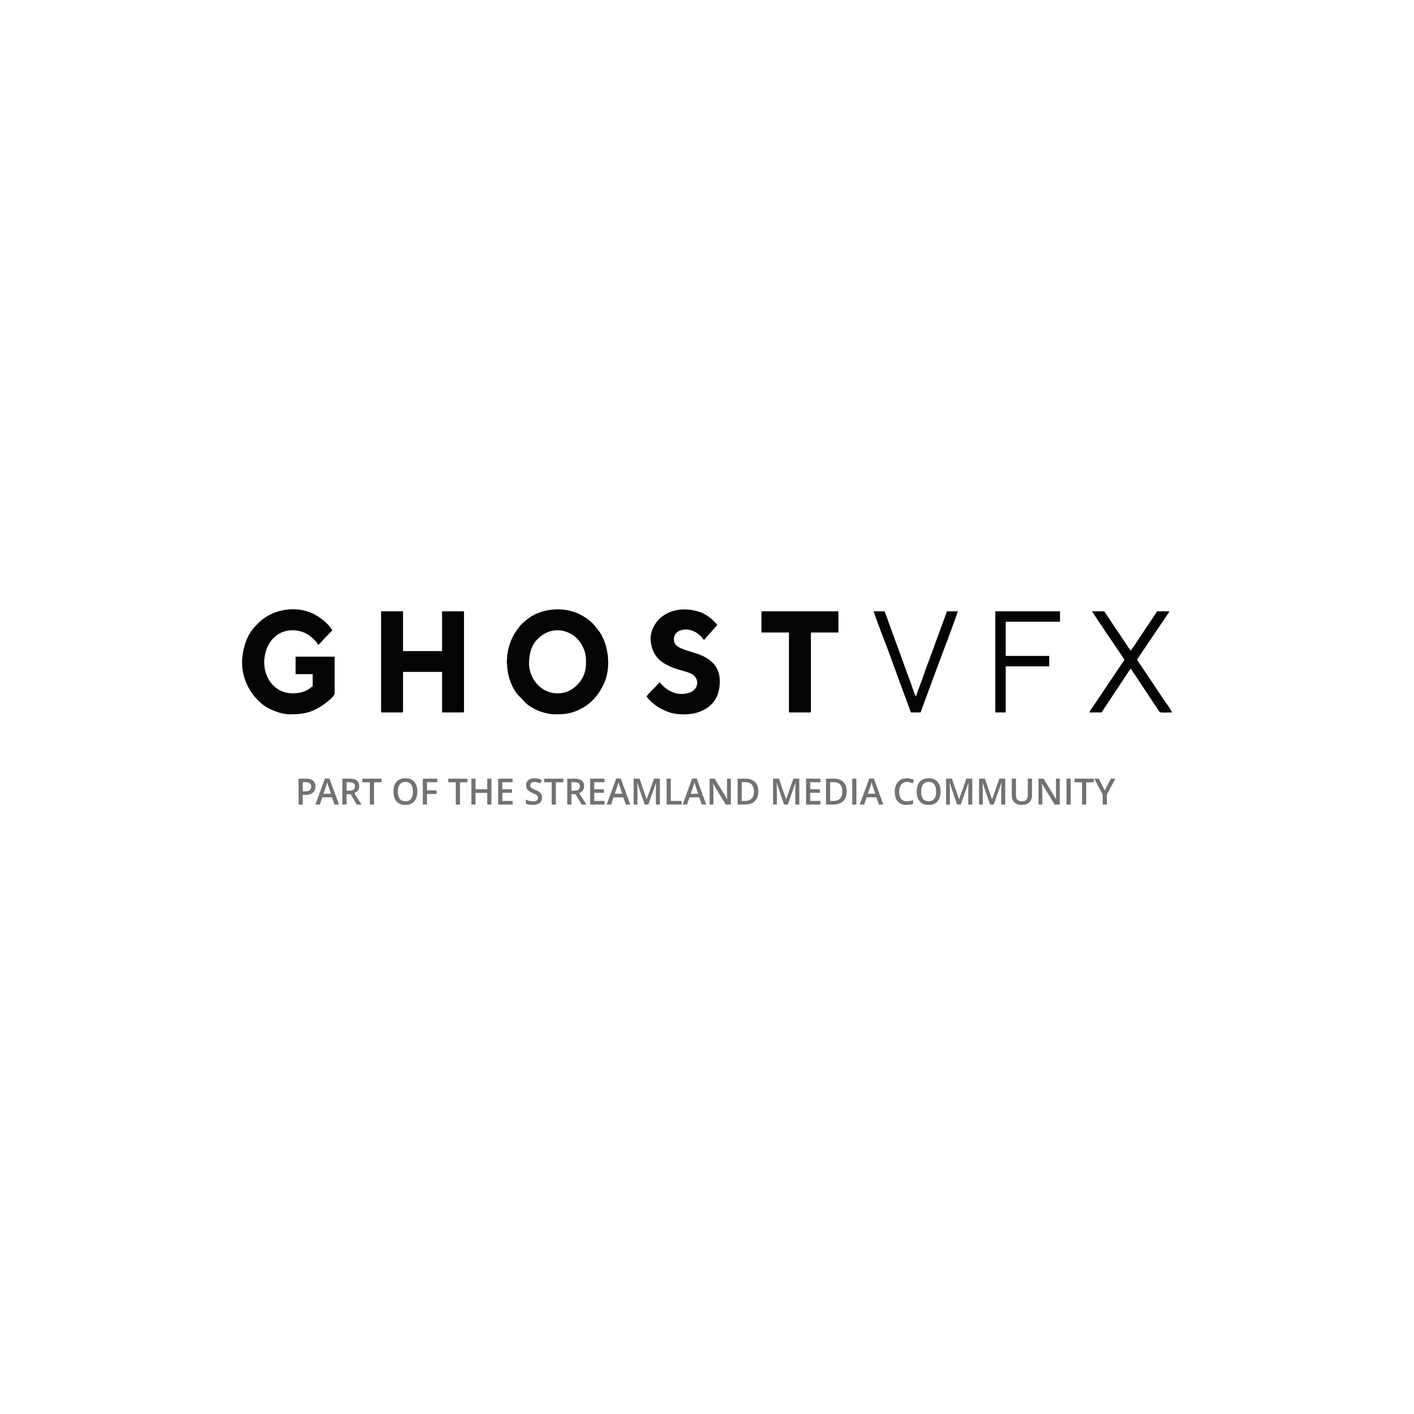 ghost vfx